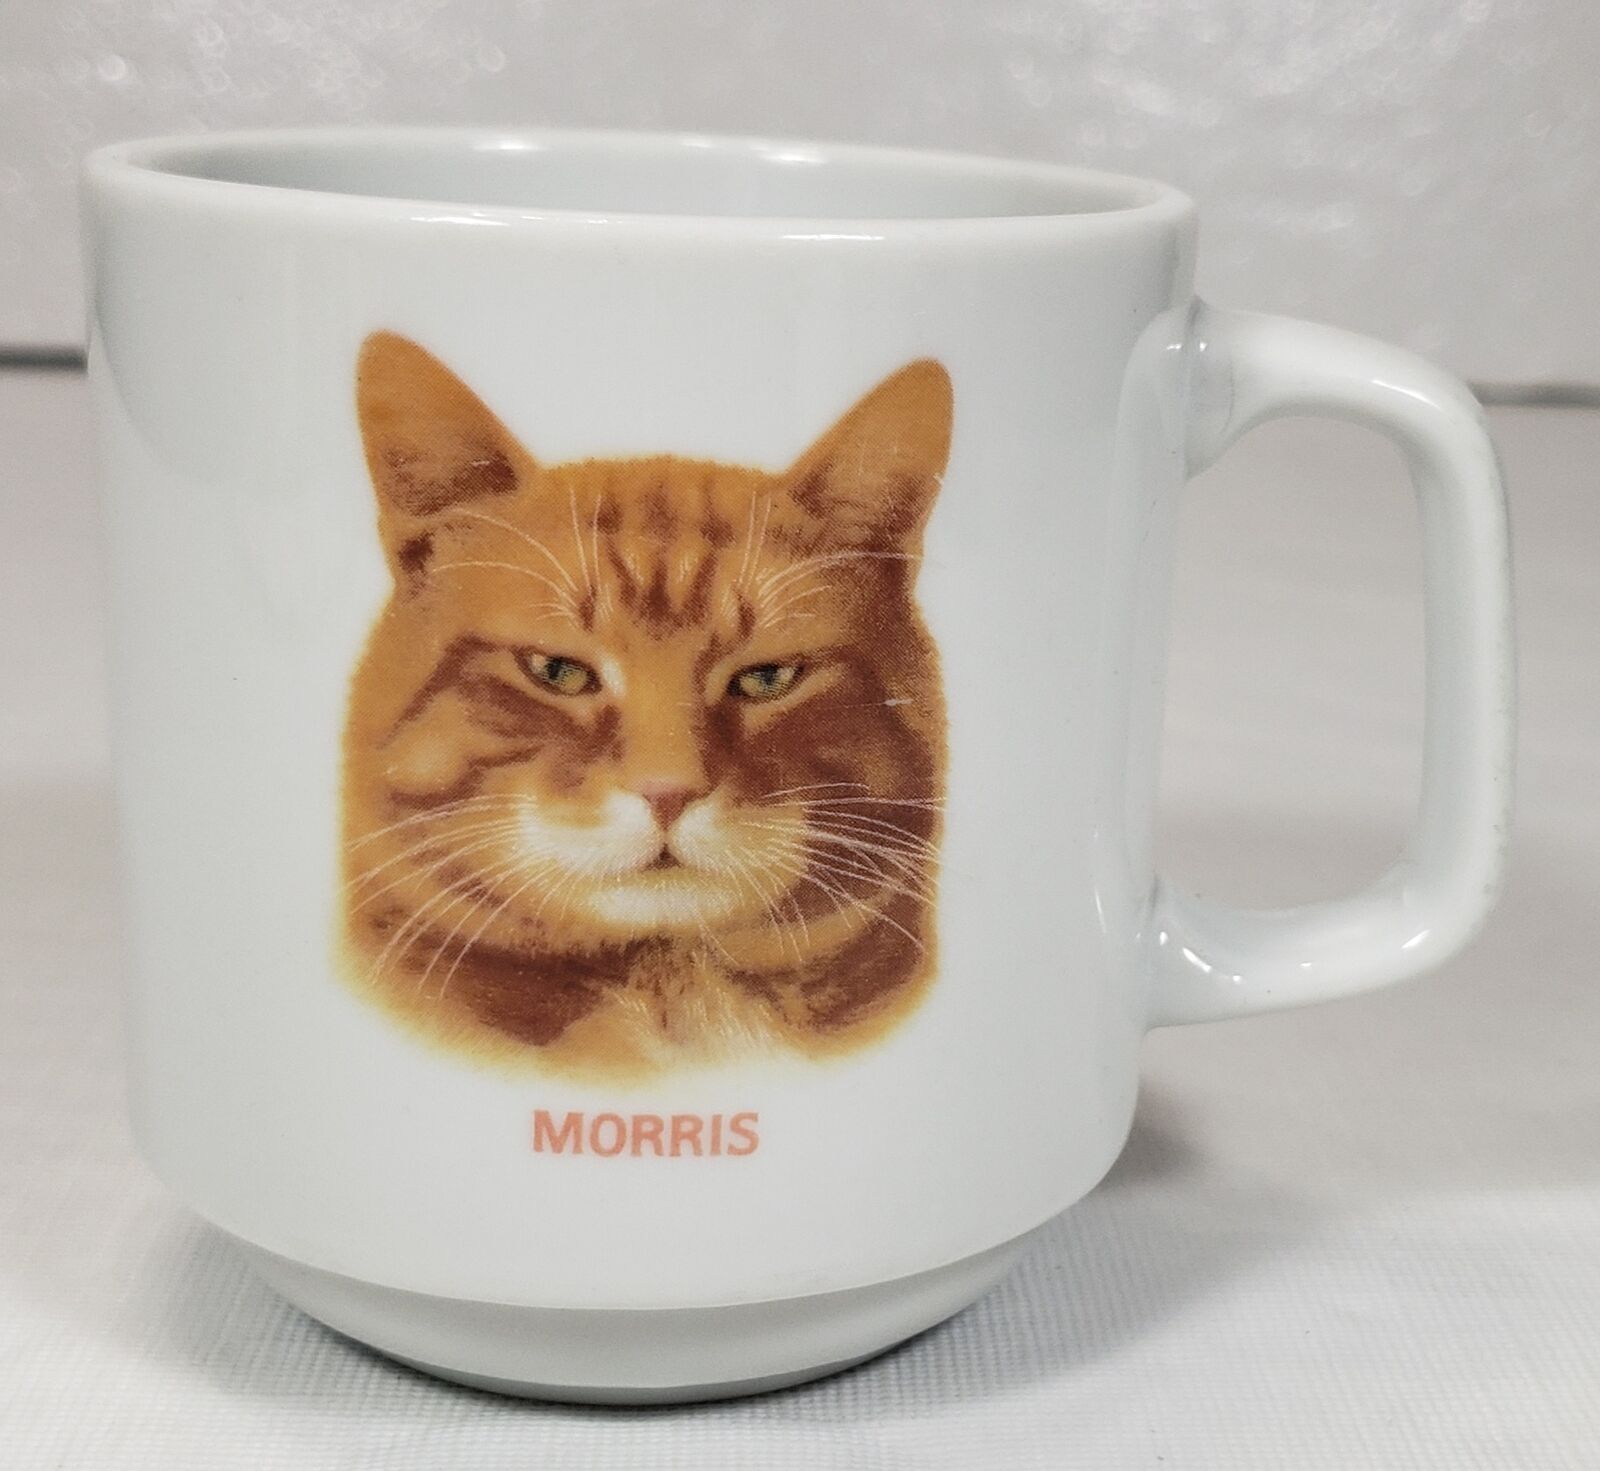 Vintage Papel Morris the Cat Promotional Advertising Mug